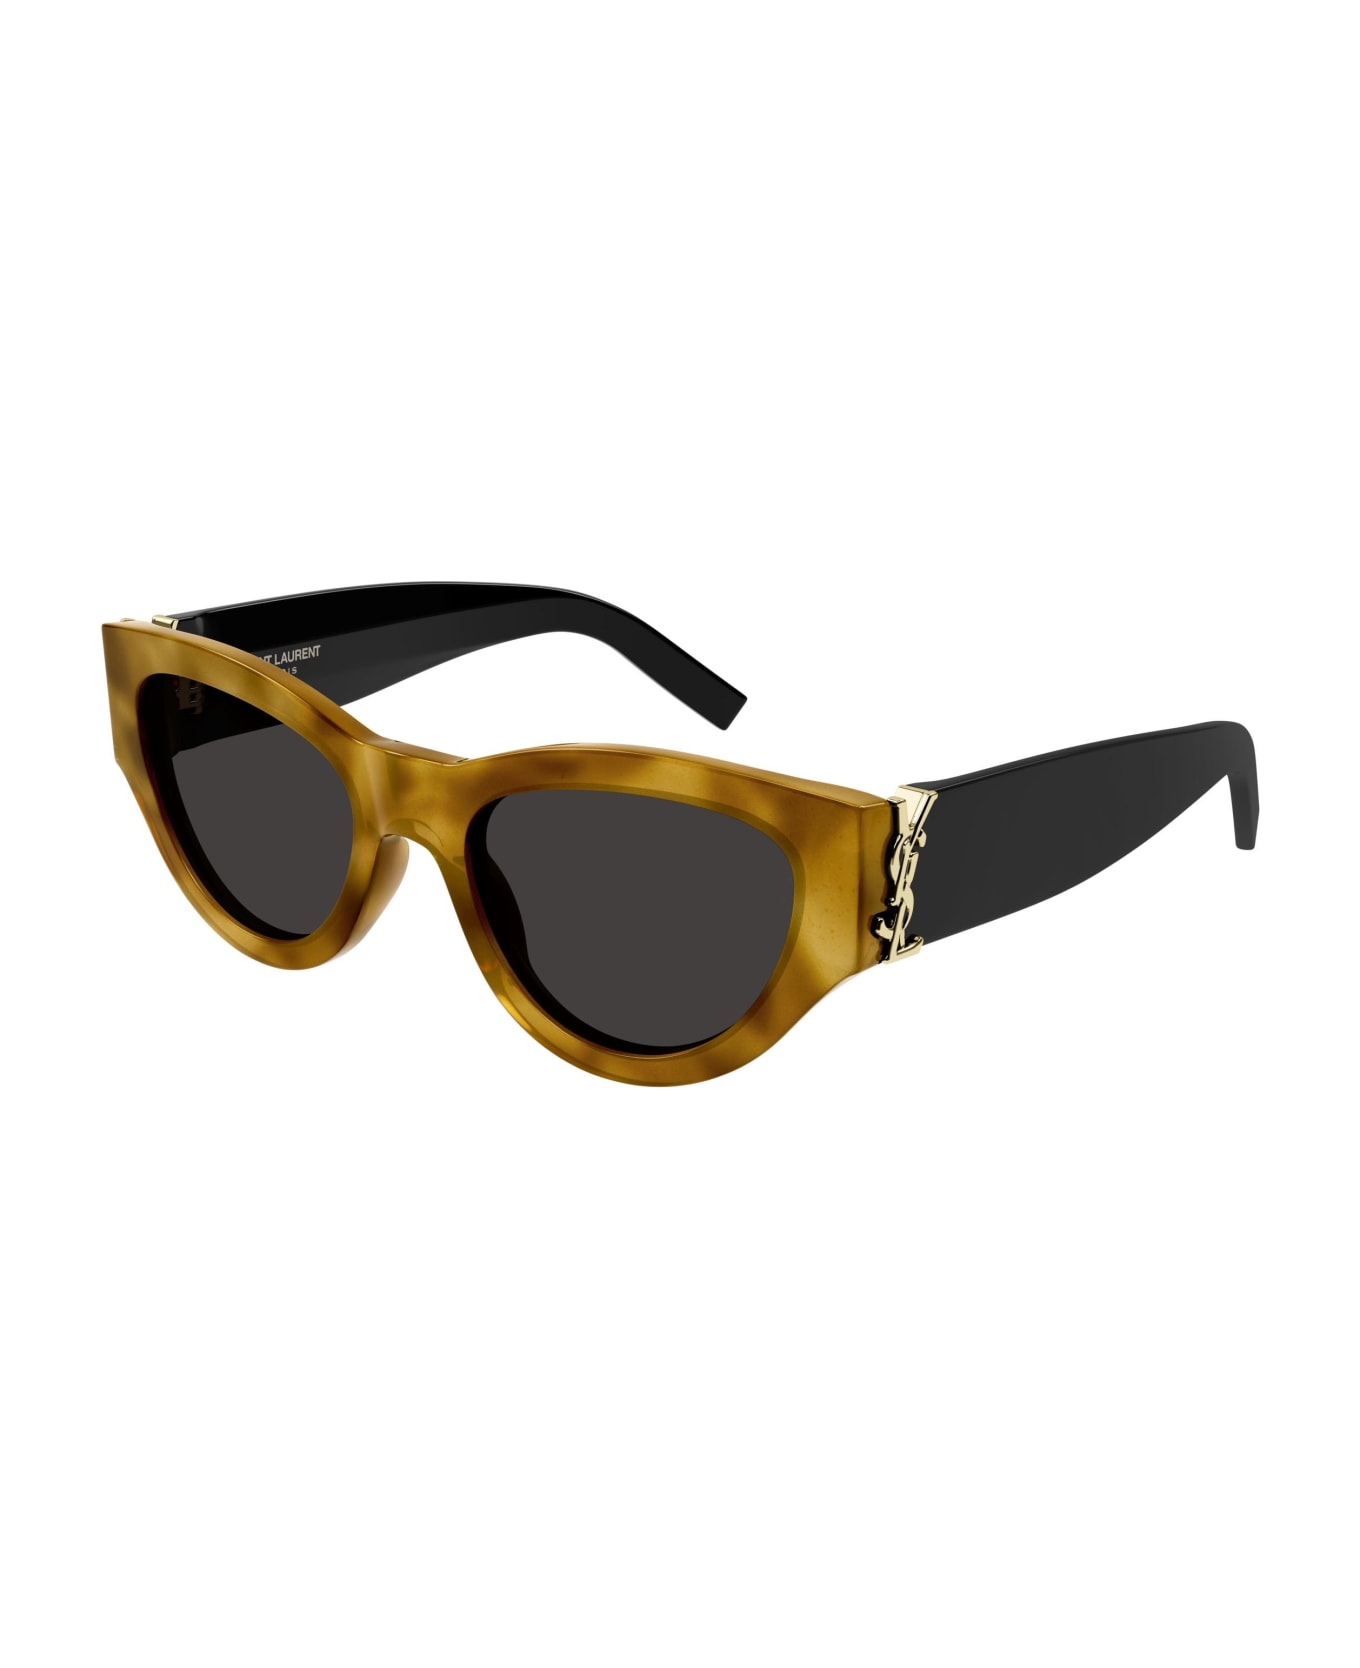 Saint Laurent Eyewear Sunglasses - Havana/Nero